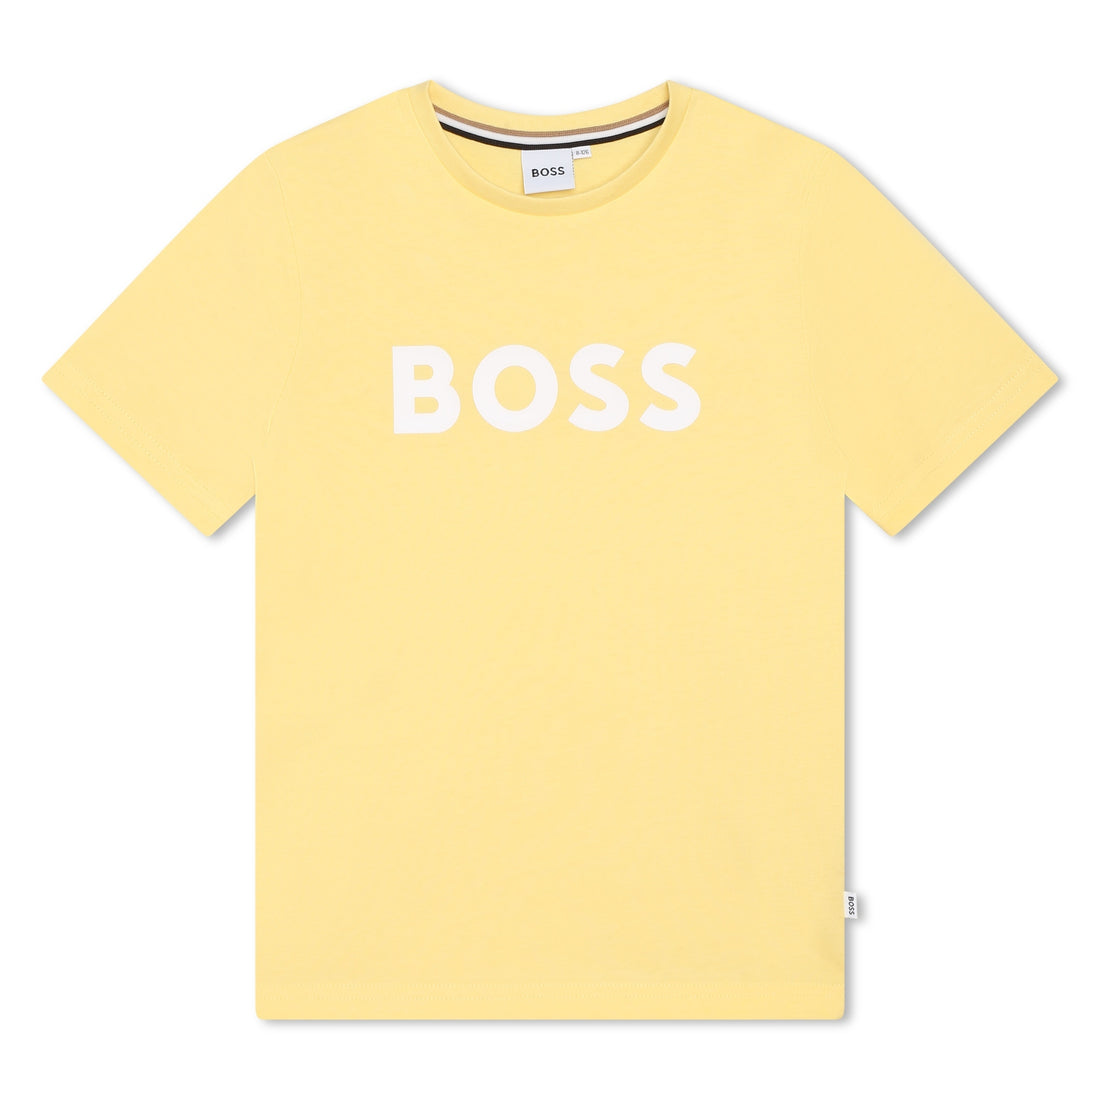 Hugo Boss Short Sleeves Tee-Shirt Style: J25O04